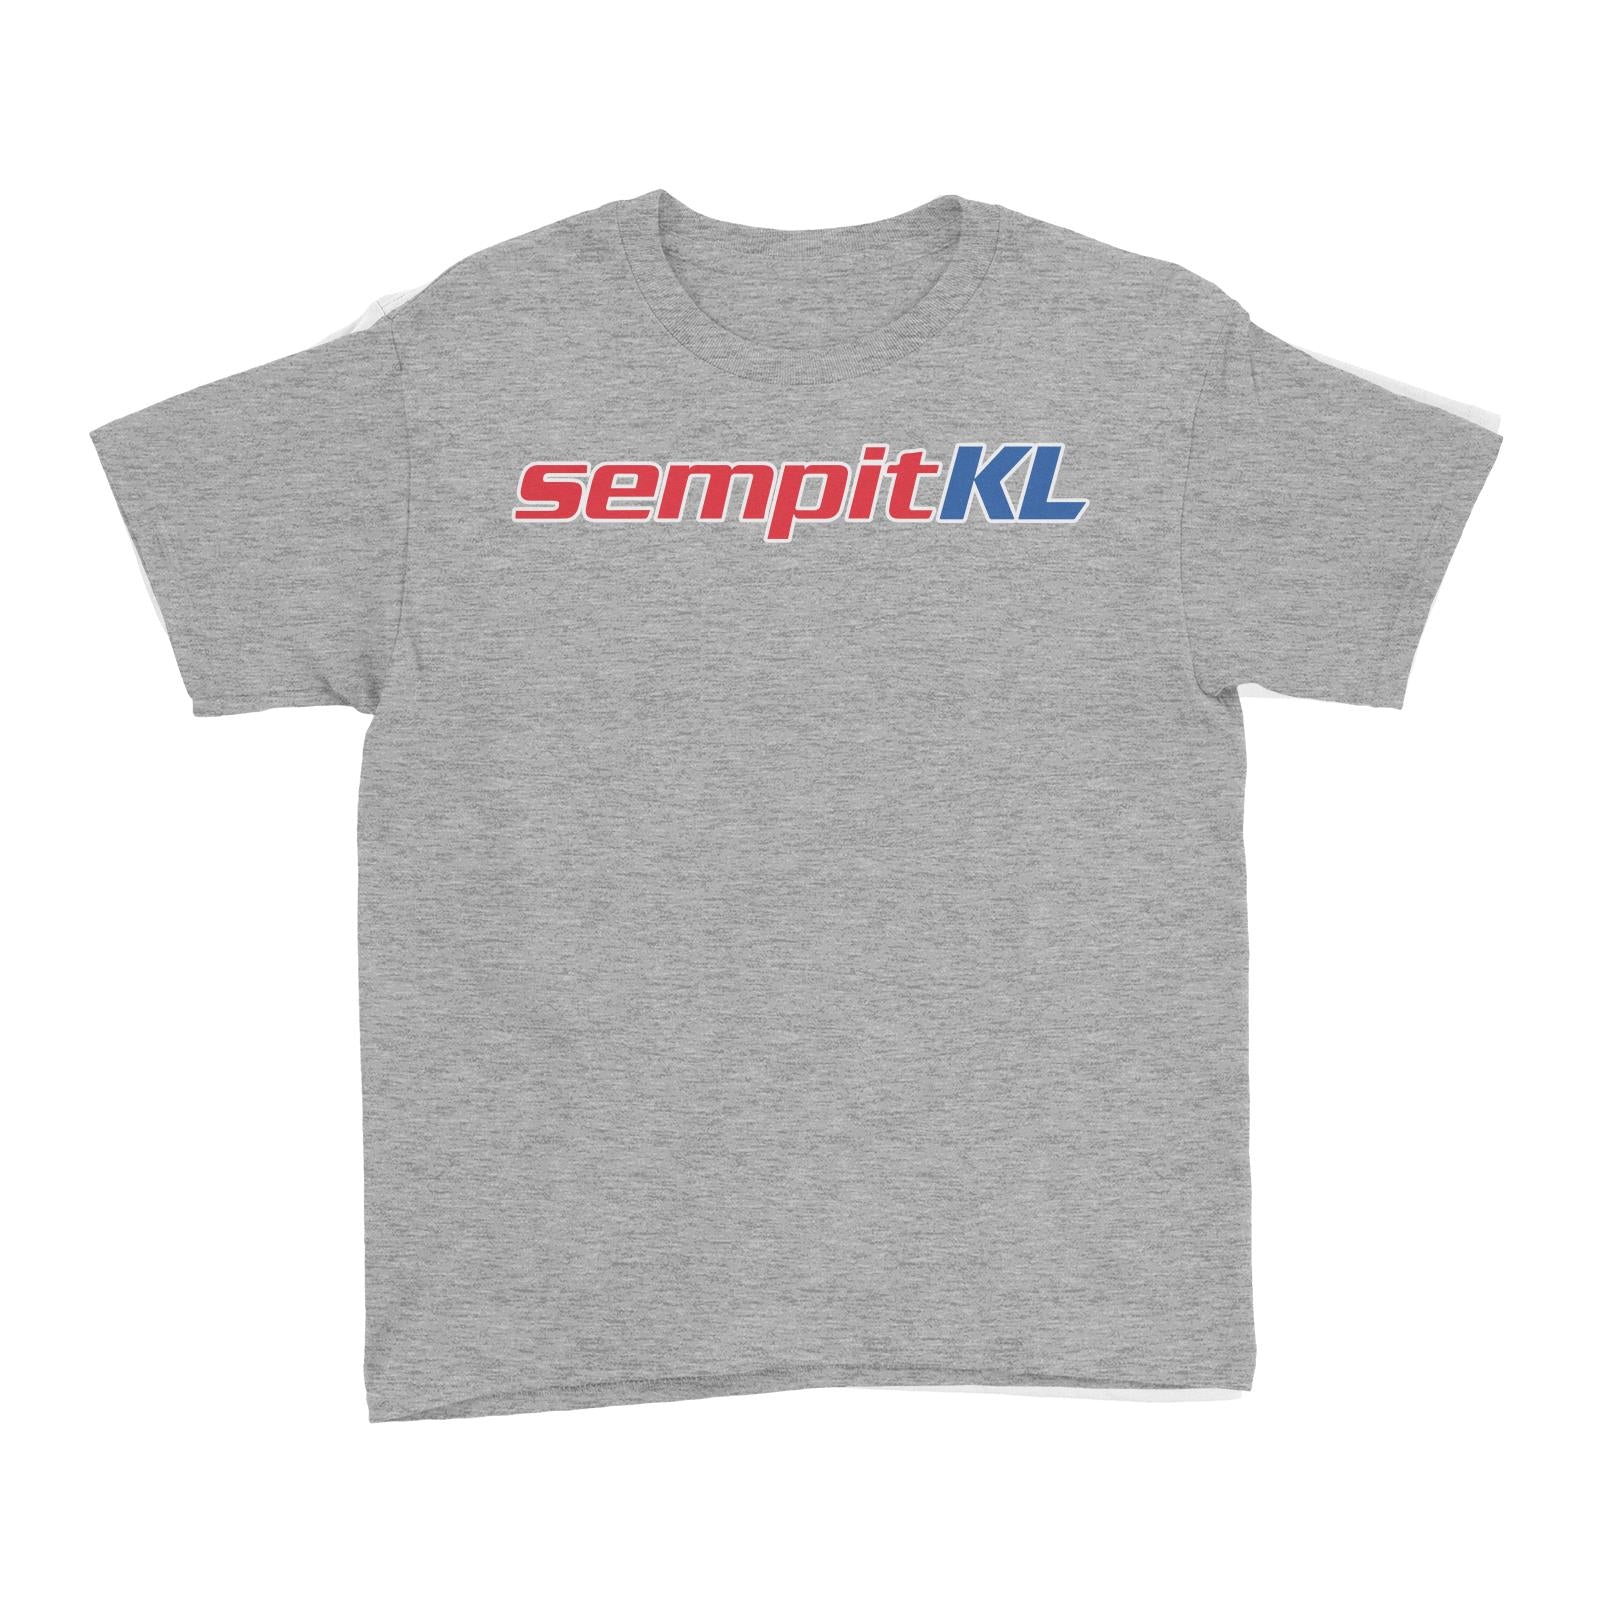 Slang Statement Sempitkl Kid's T-Shirt